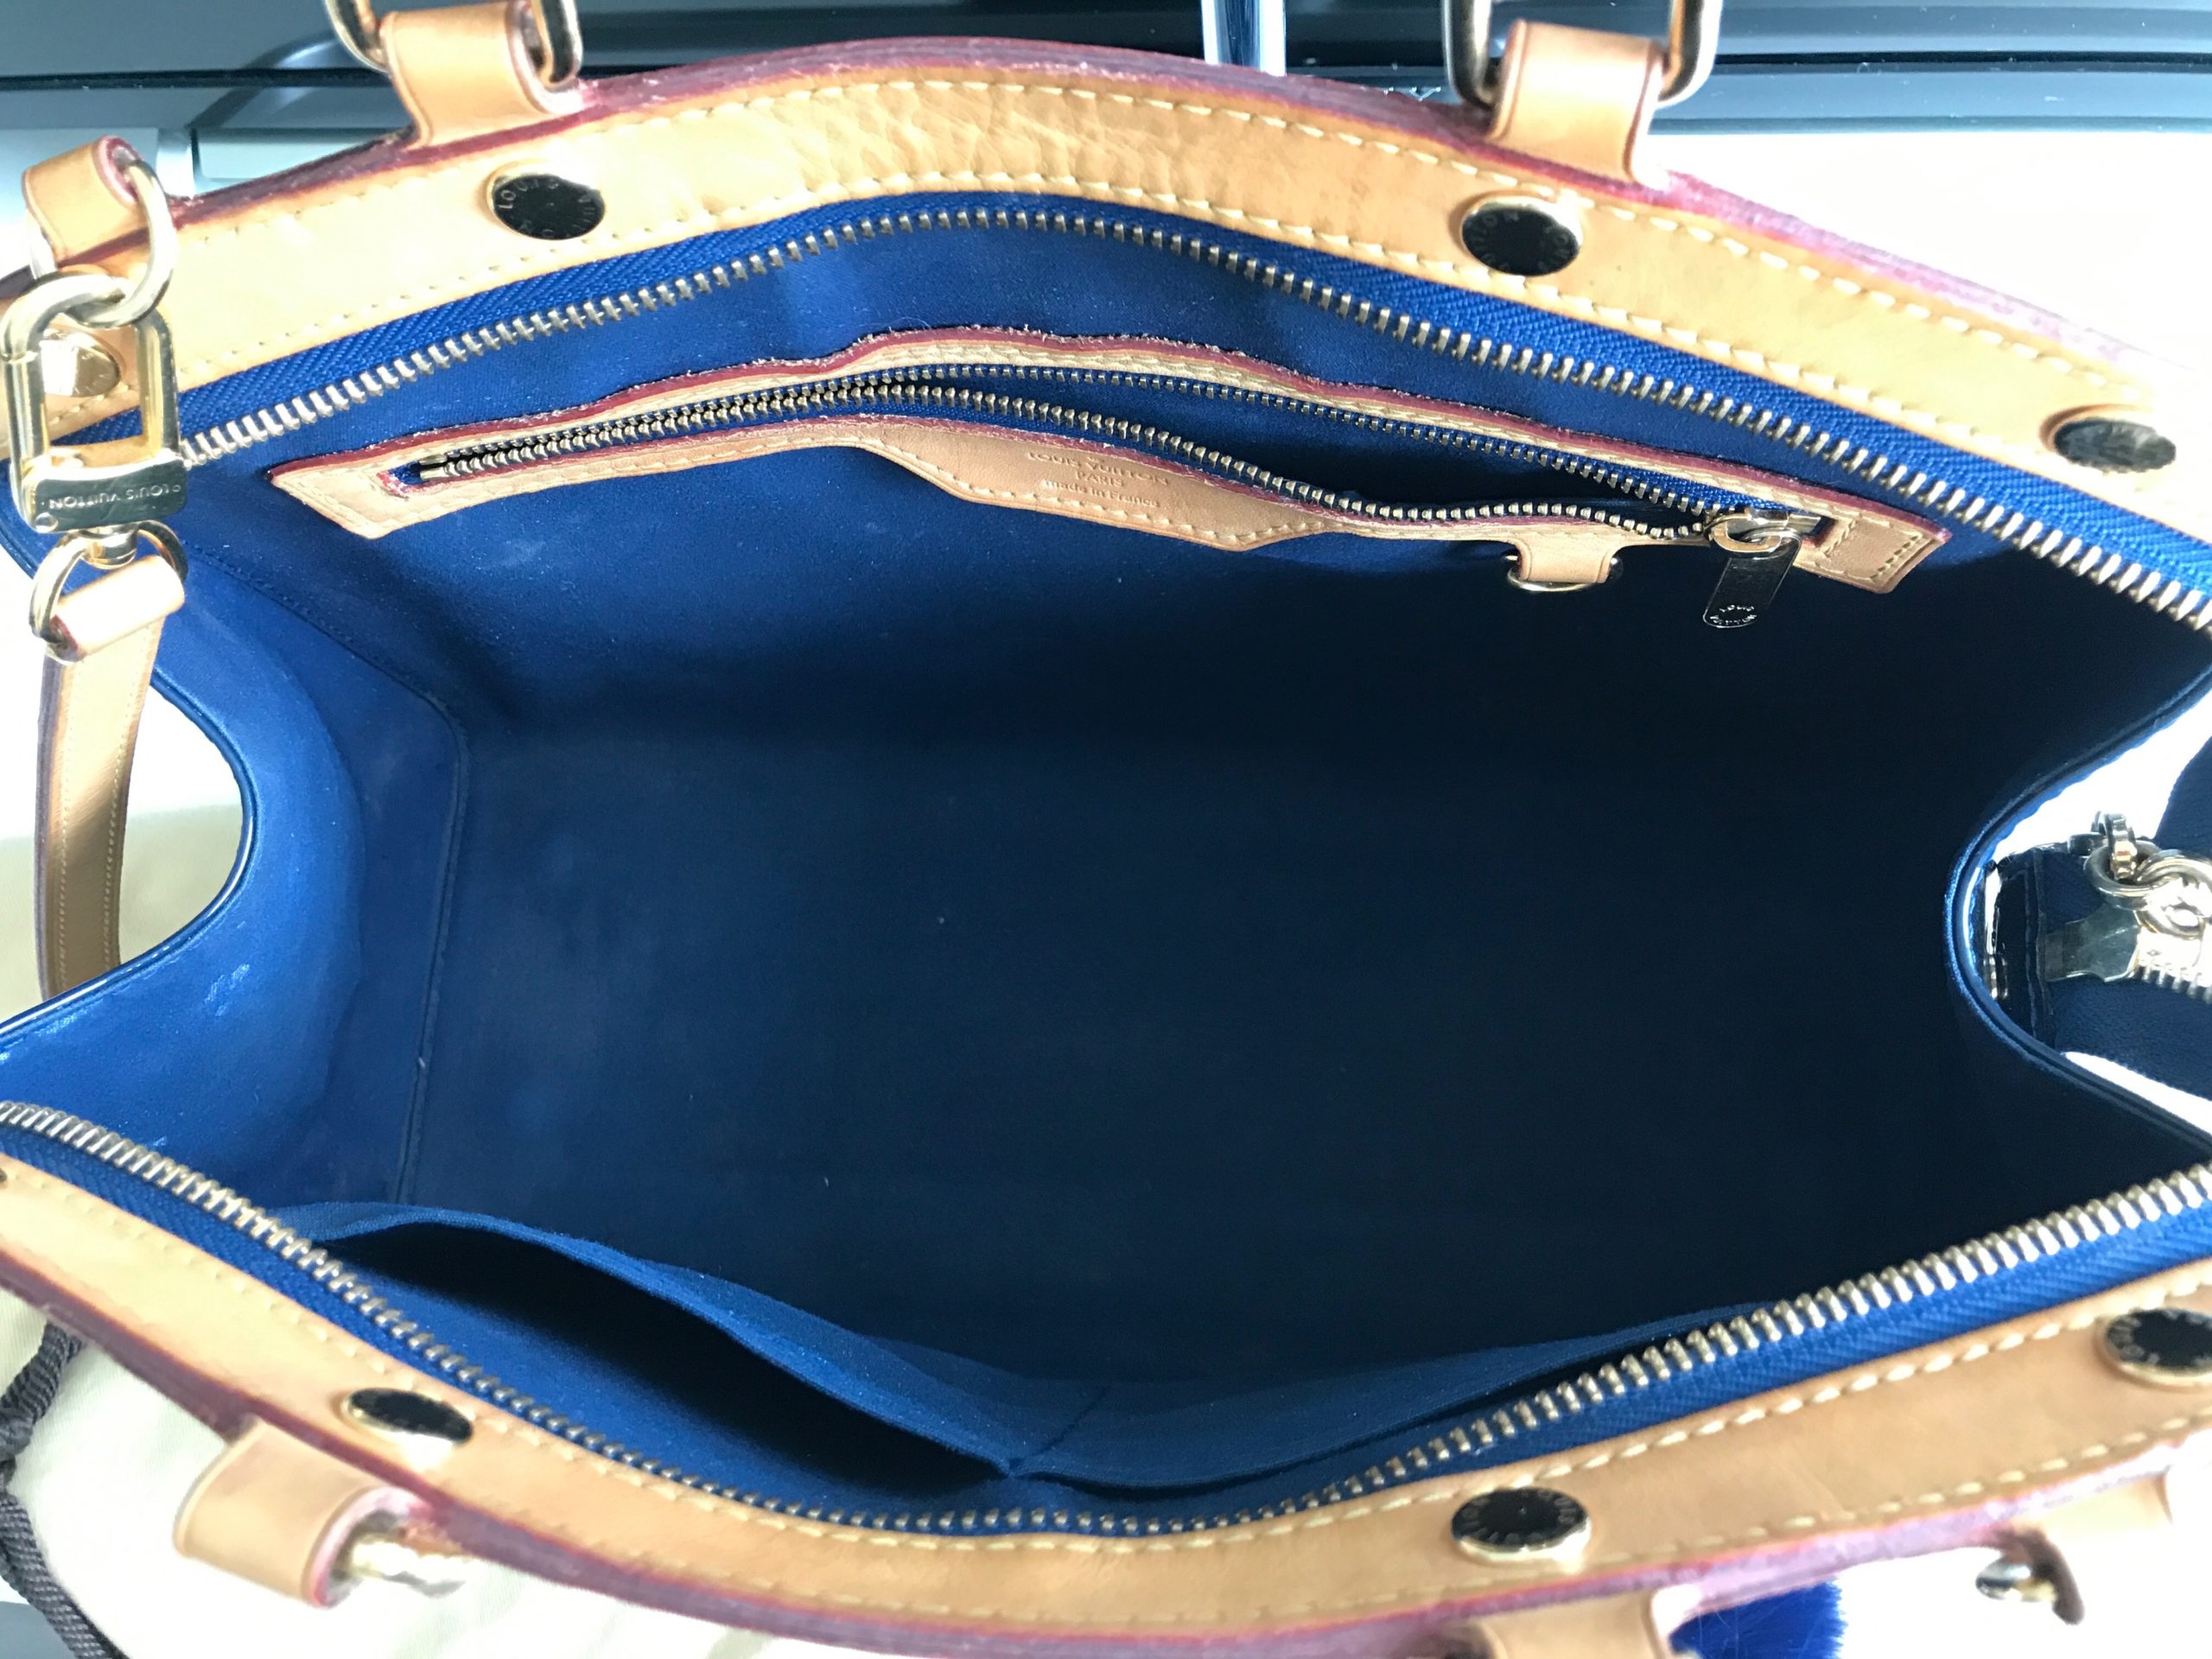 Louis Vuitton, Bags, Authentic Louis Vuitton Monogram Vernis Houston Tote  In Tiffany Blue